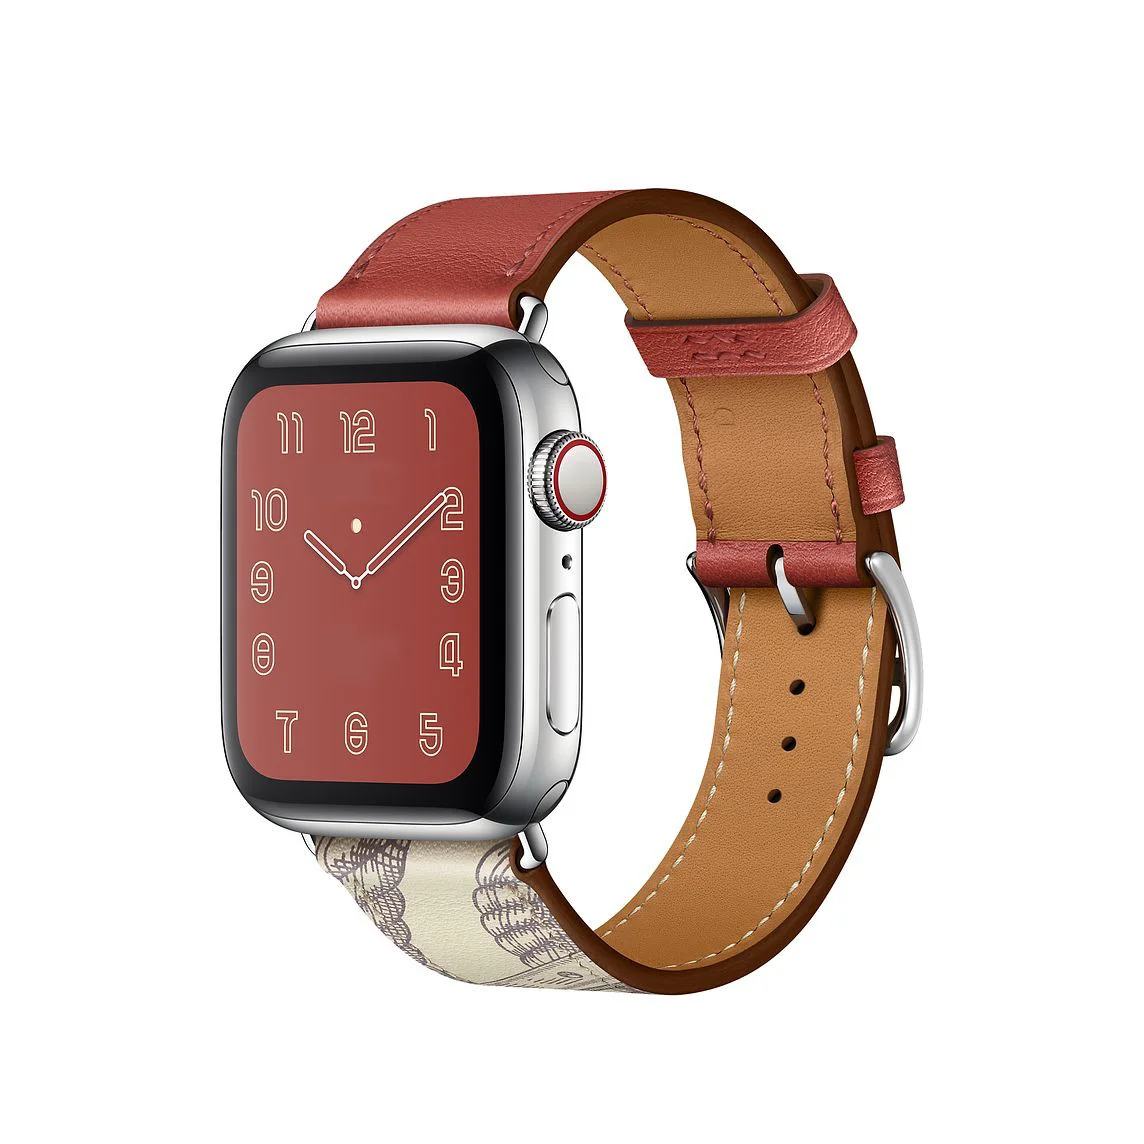 Řemínek iMore Single Tour Apple Watch Series 3/2/1 (42mm) - Cihla/Beton